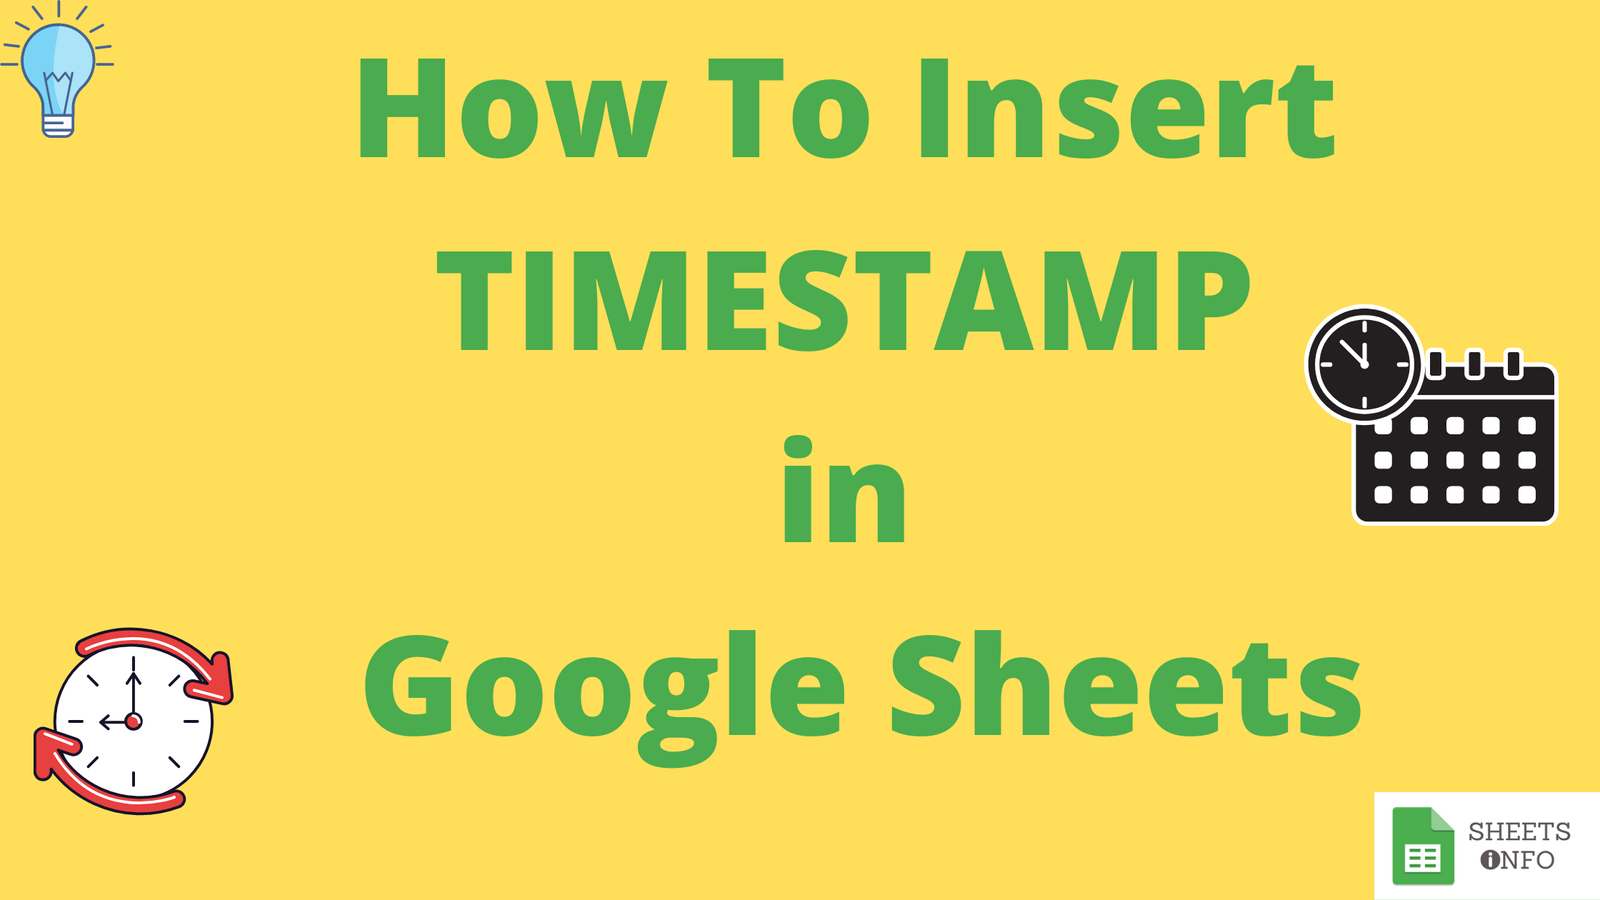 Insert TIMESTAMP in Google Sheets